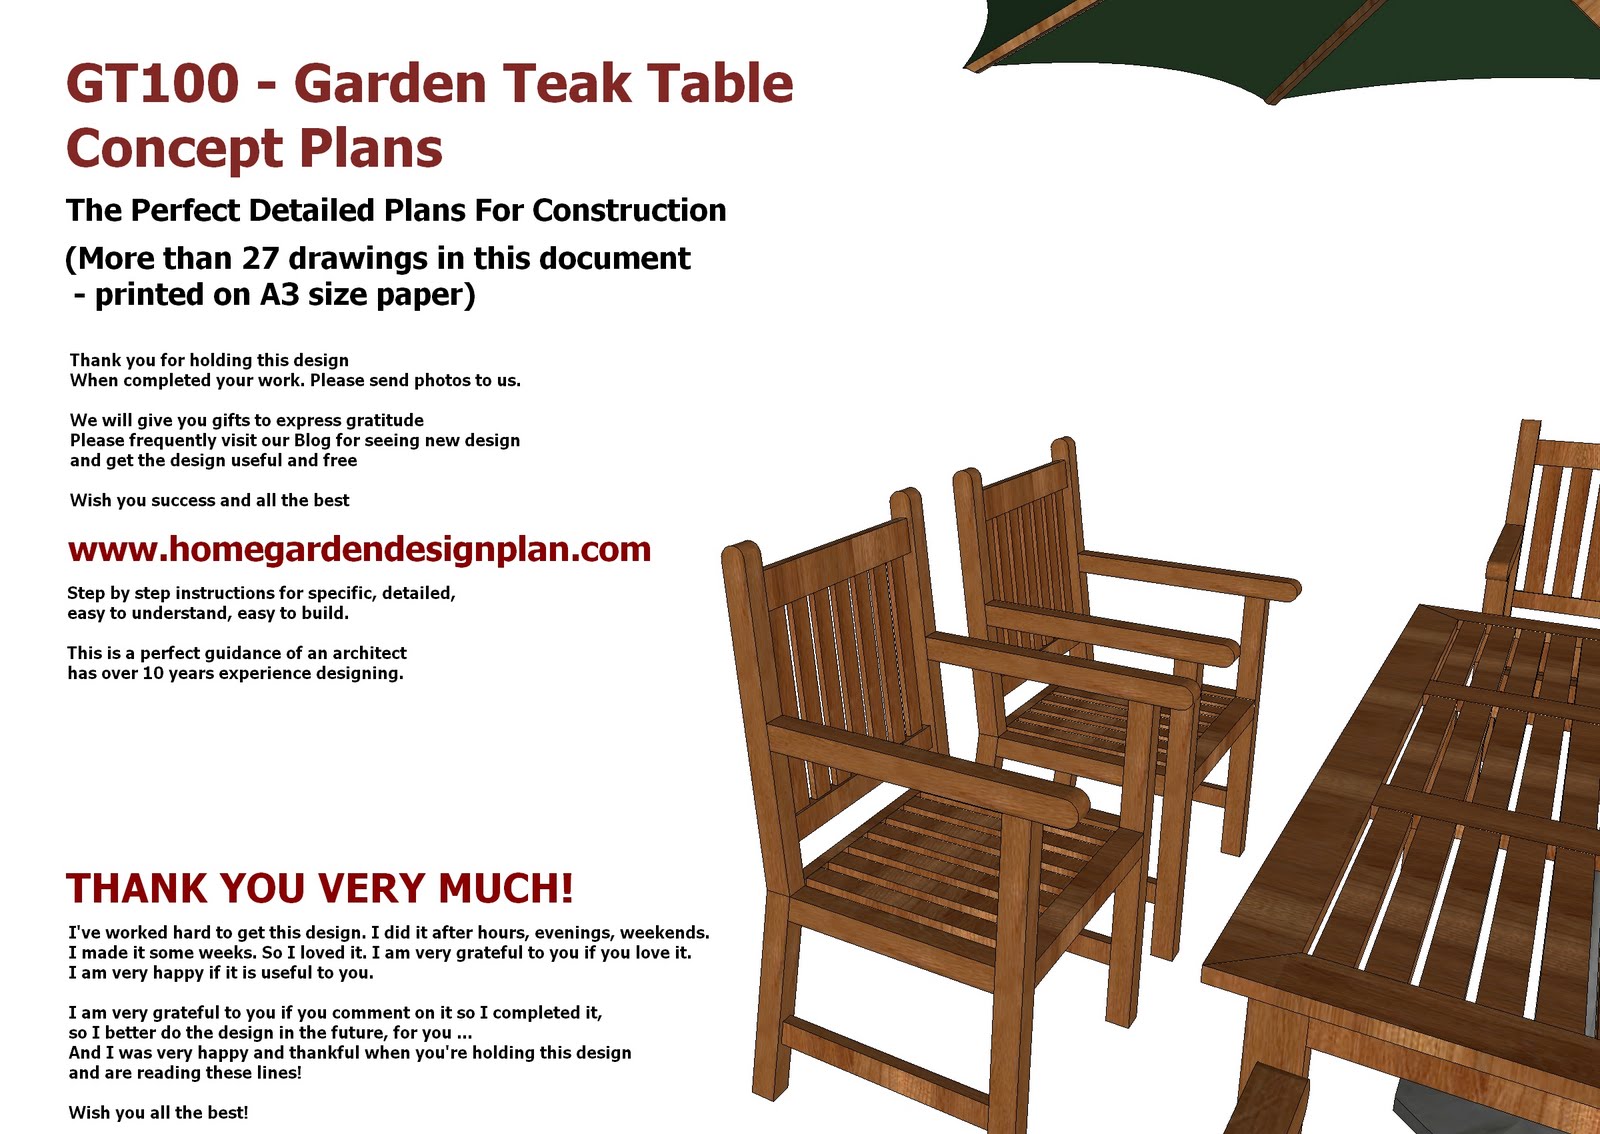 ... - Garden Teak Tables - Woodworking Plans - Outdoor Furniture Plans